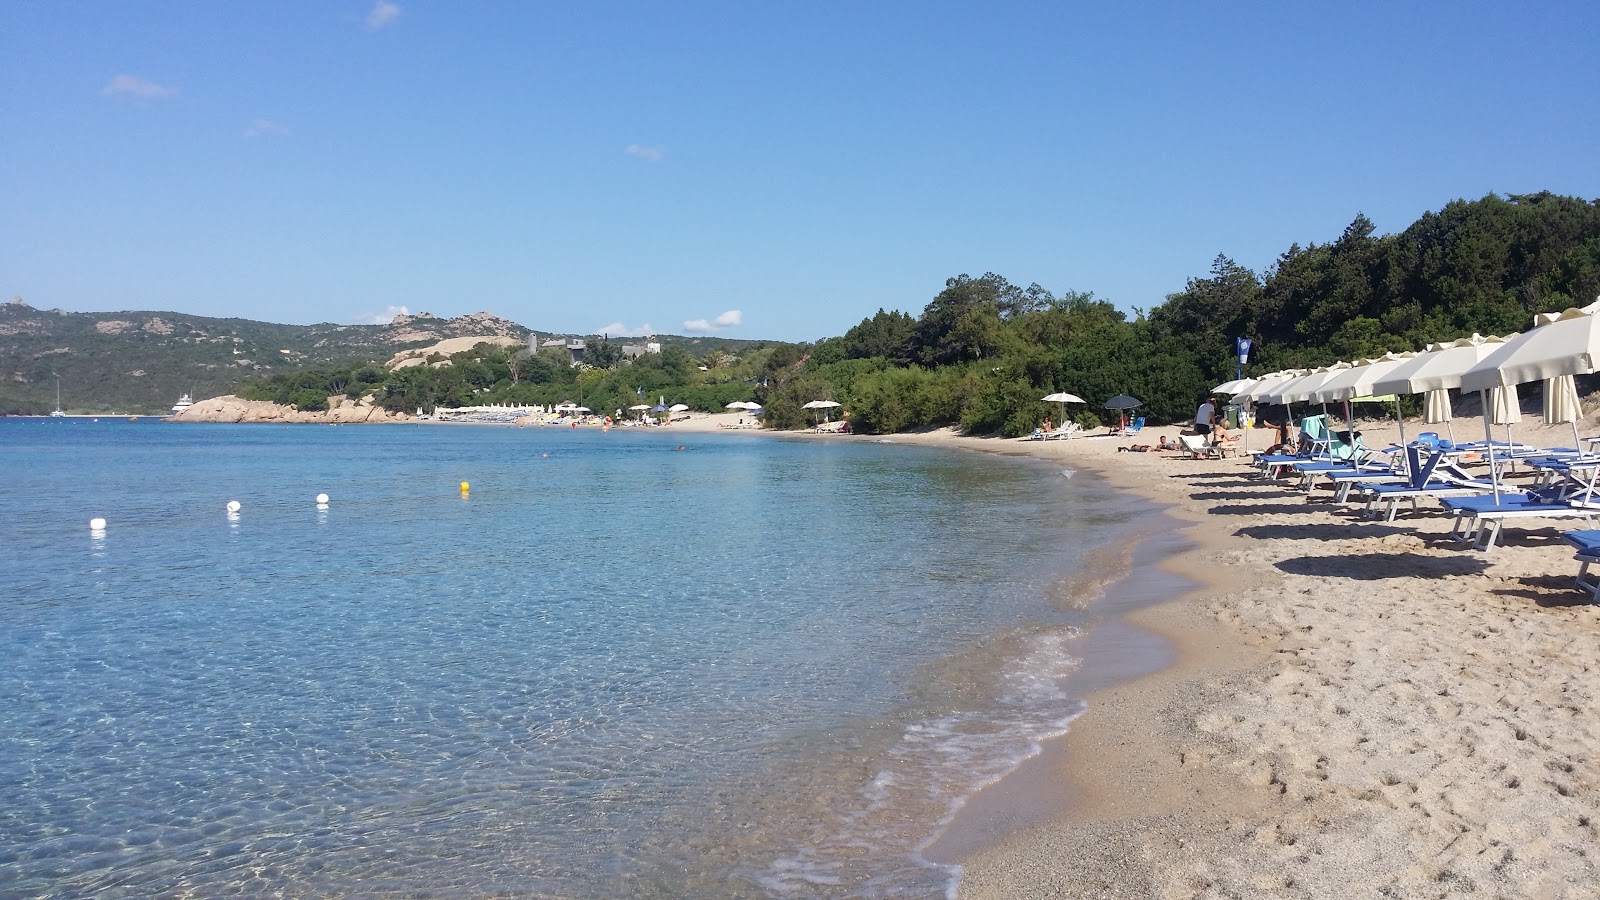 Foto de Spiaggia La Celvia - lugar popular entre os apreciadores de relaxamento